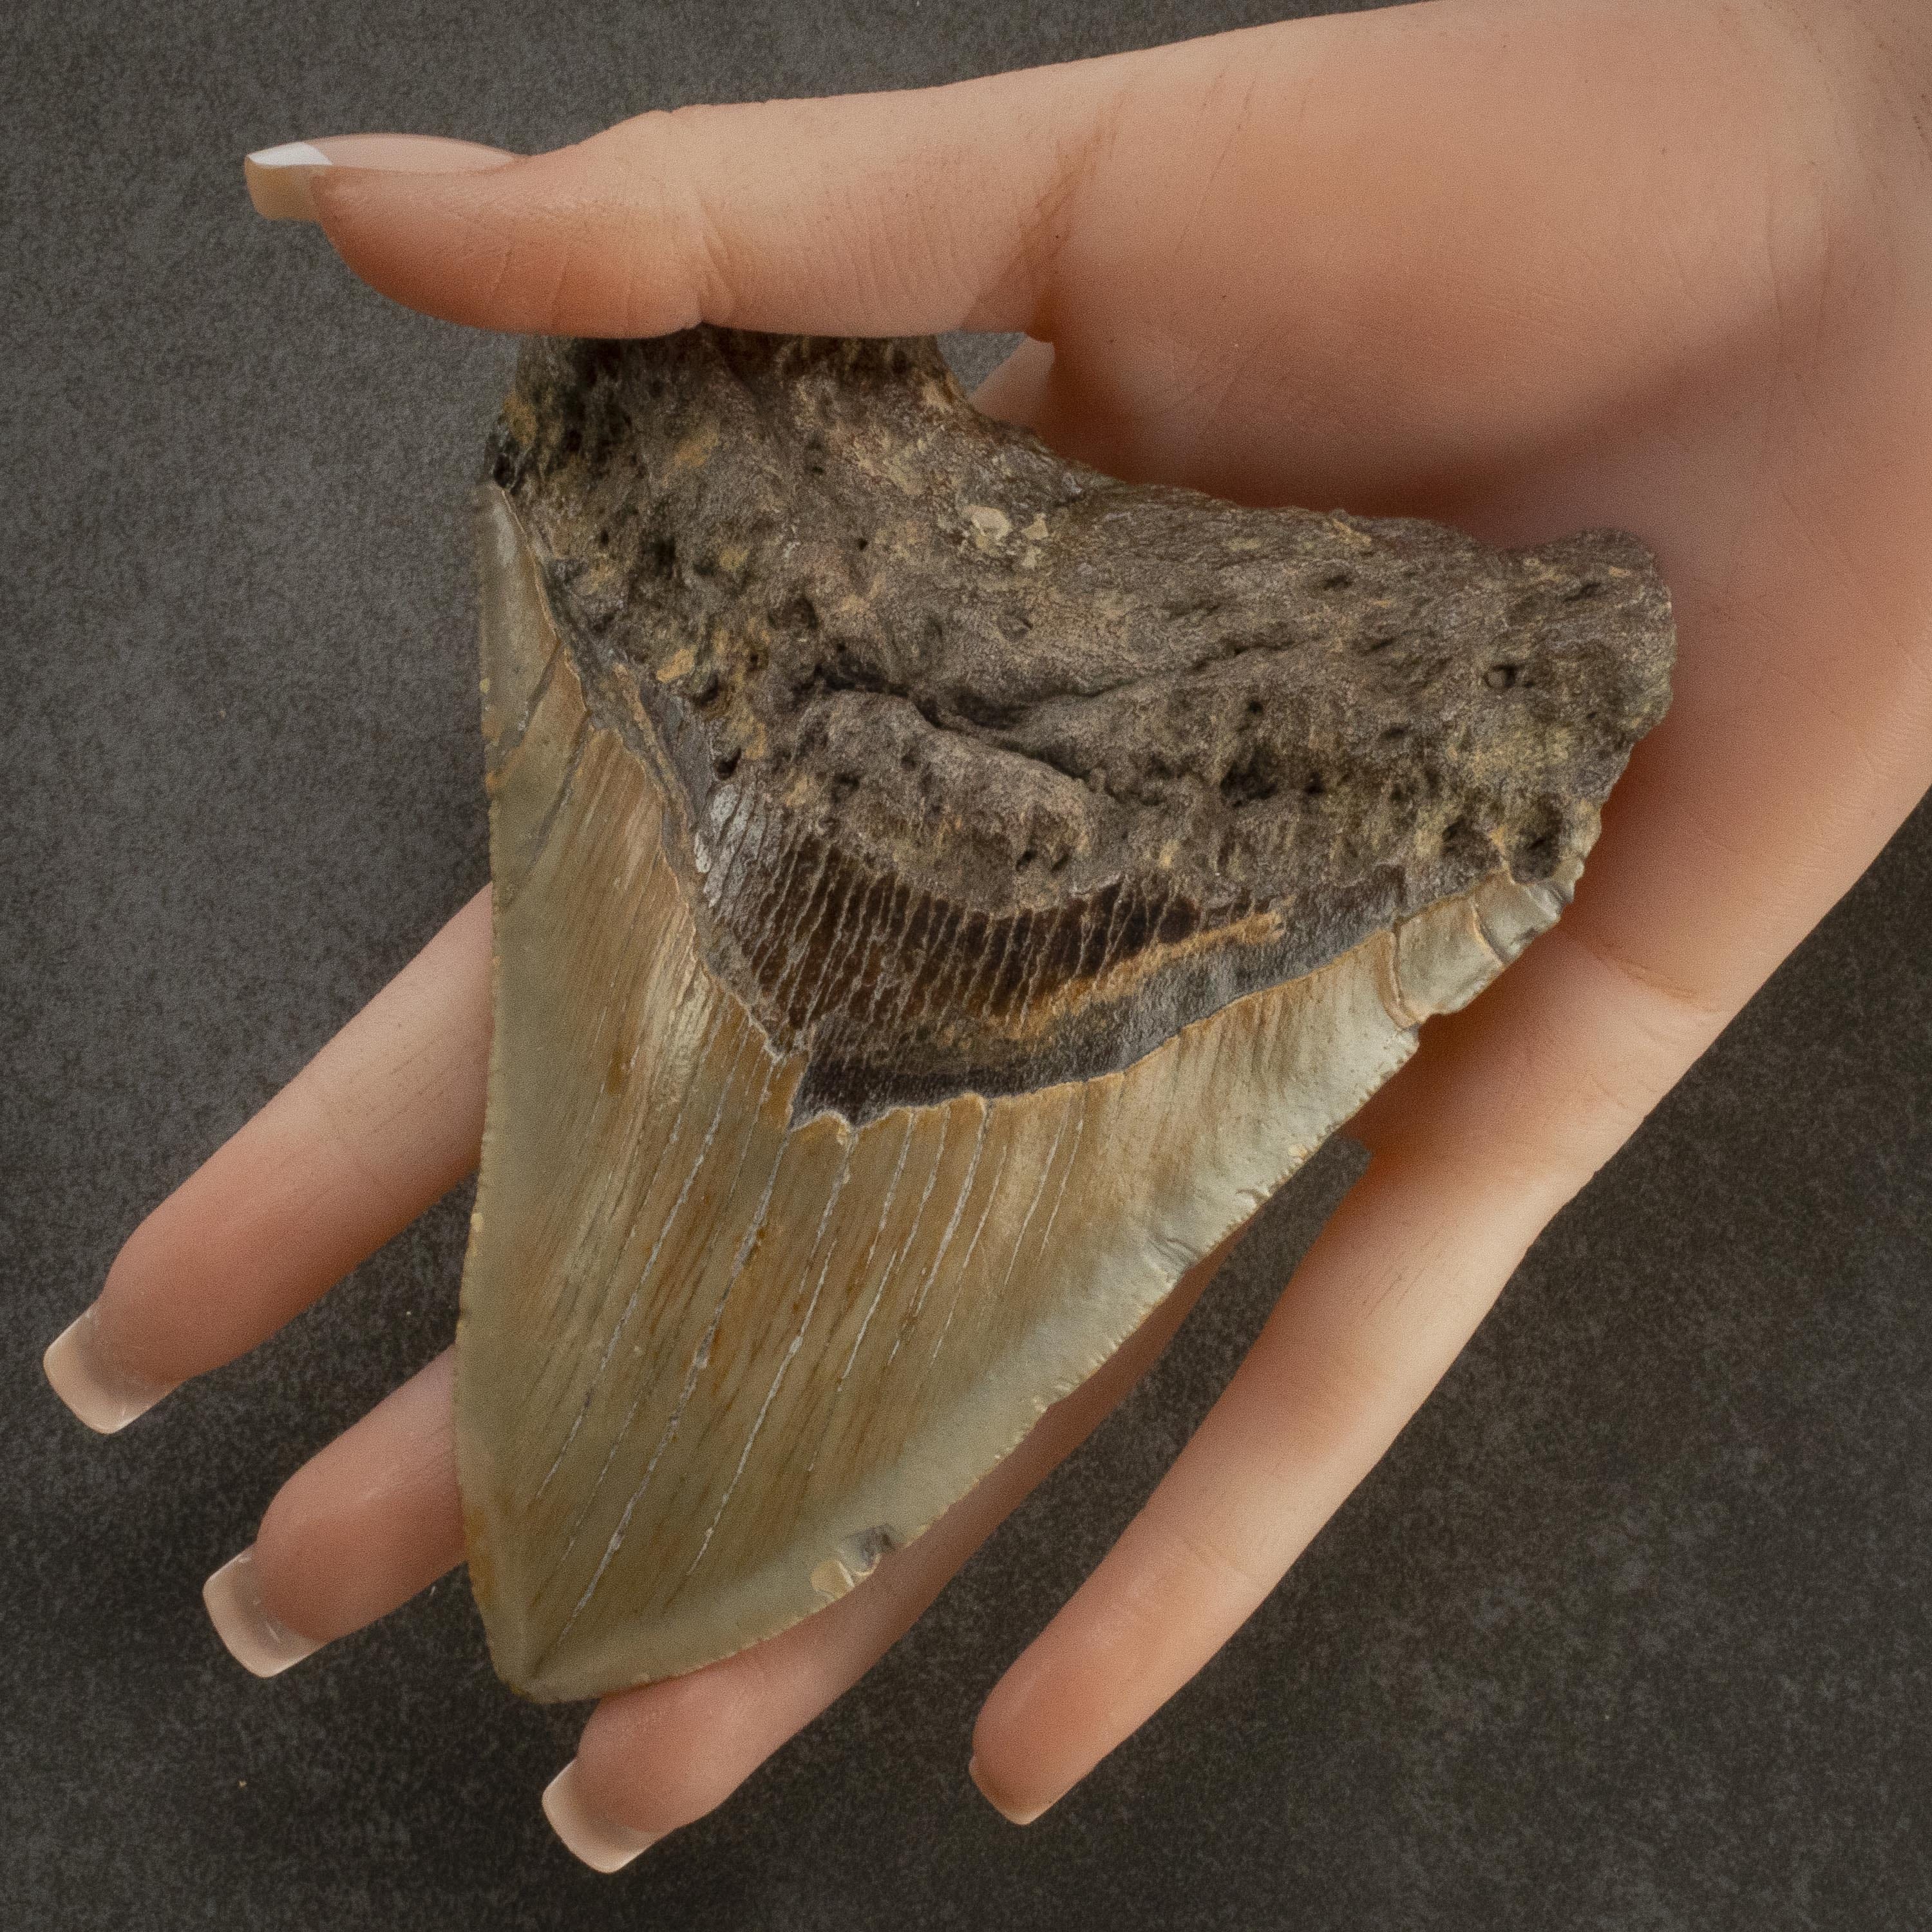 Kalifano Megalodon Teeth Megalodon Tooth from South Carolina - 4.8" ST2000.085